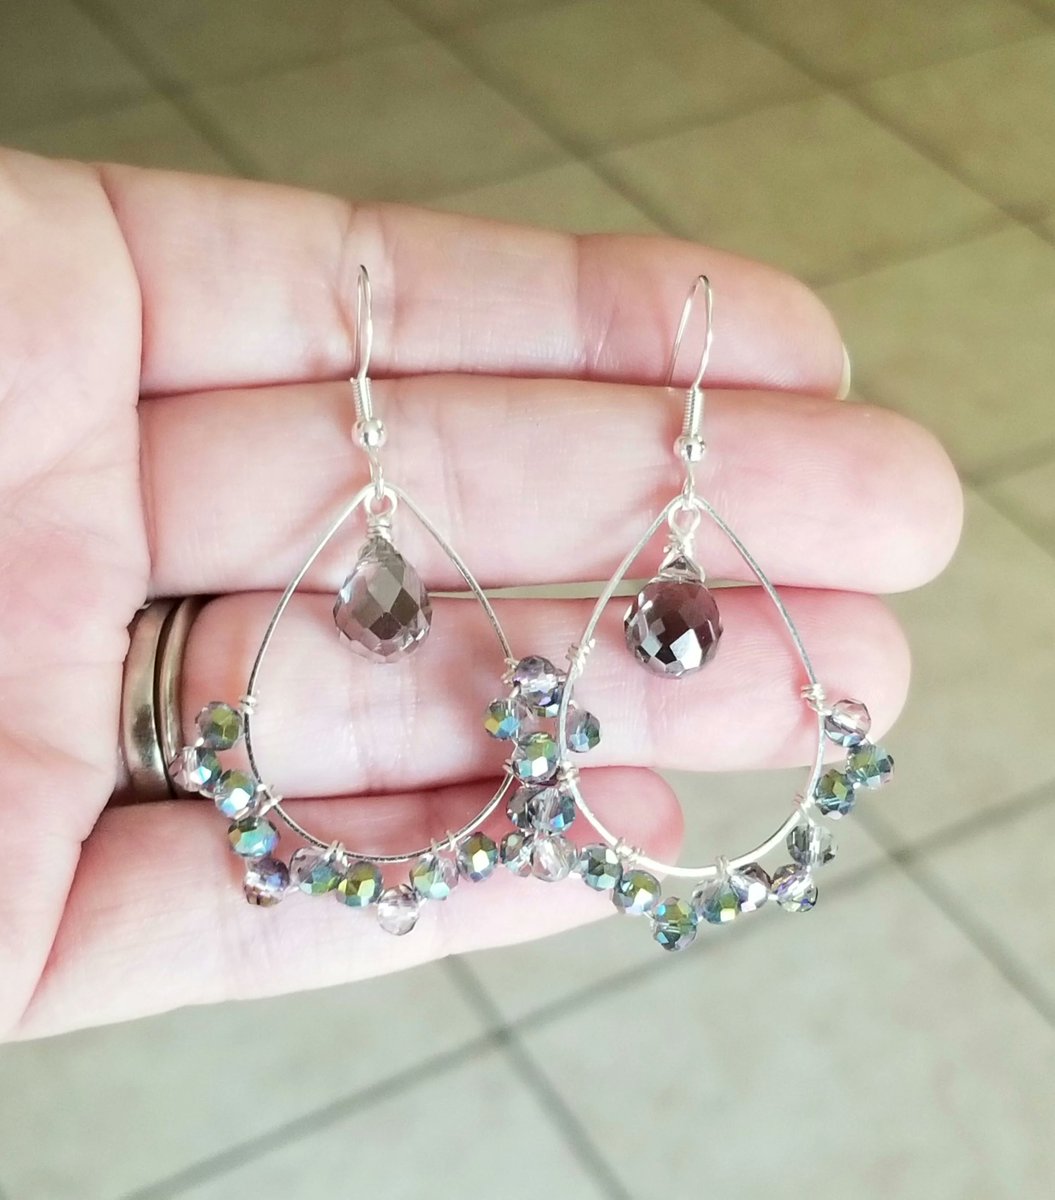 Crystal Teardrop Earrings, Crystal Dangle Earrings, #BeadedEarrings #giftsforher #handmadejewelry #Mothersday #Mothersdaygift #Mothersdaygifts #bridal #Etsy #bridejewelry #wedding #crystalearrings #jewelry #earrings #statementearrings 

 etsy.me/4airZ5M via @Etsy